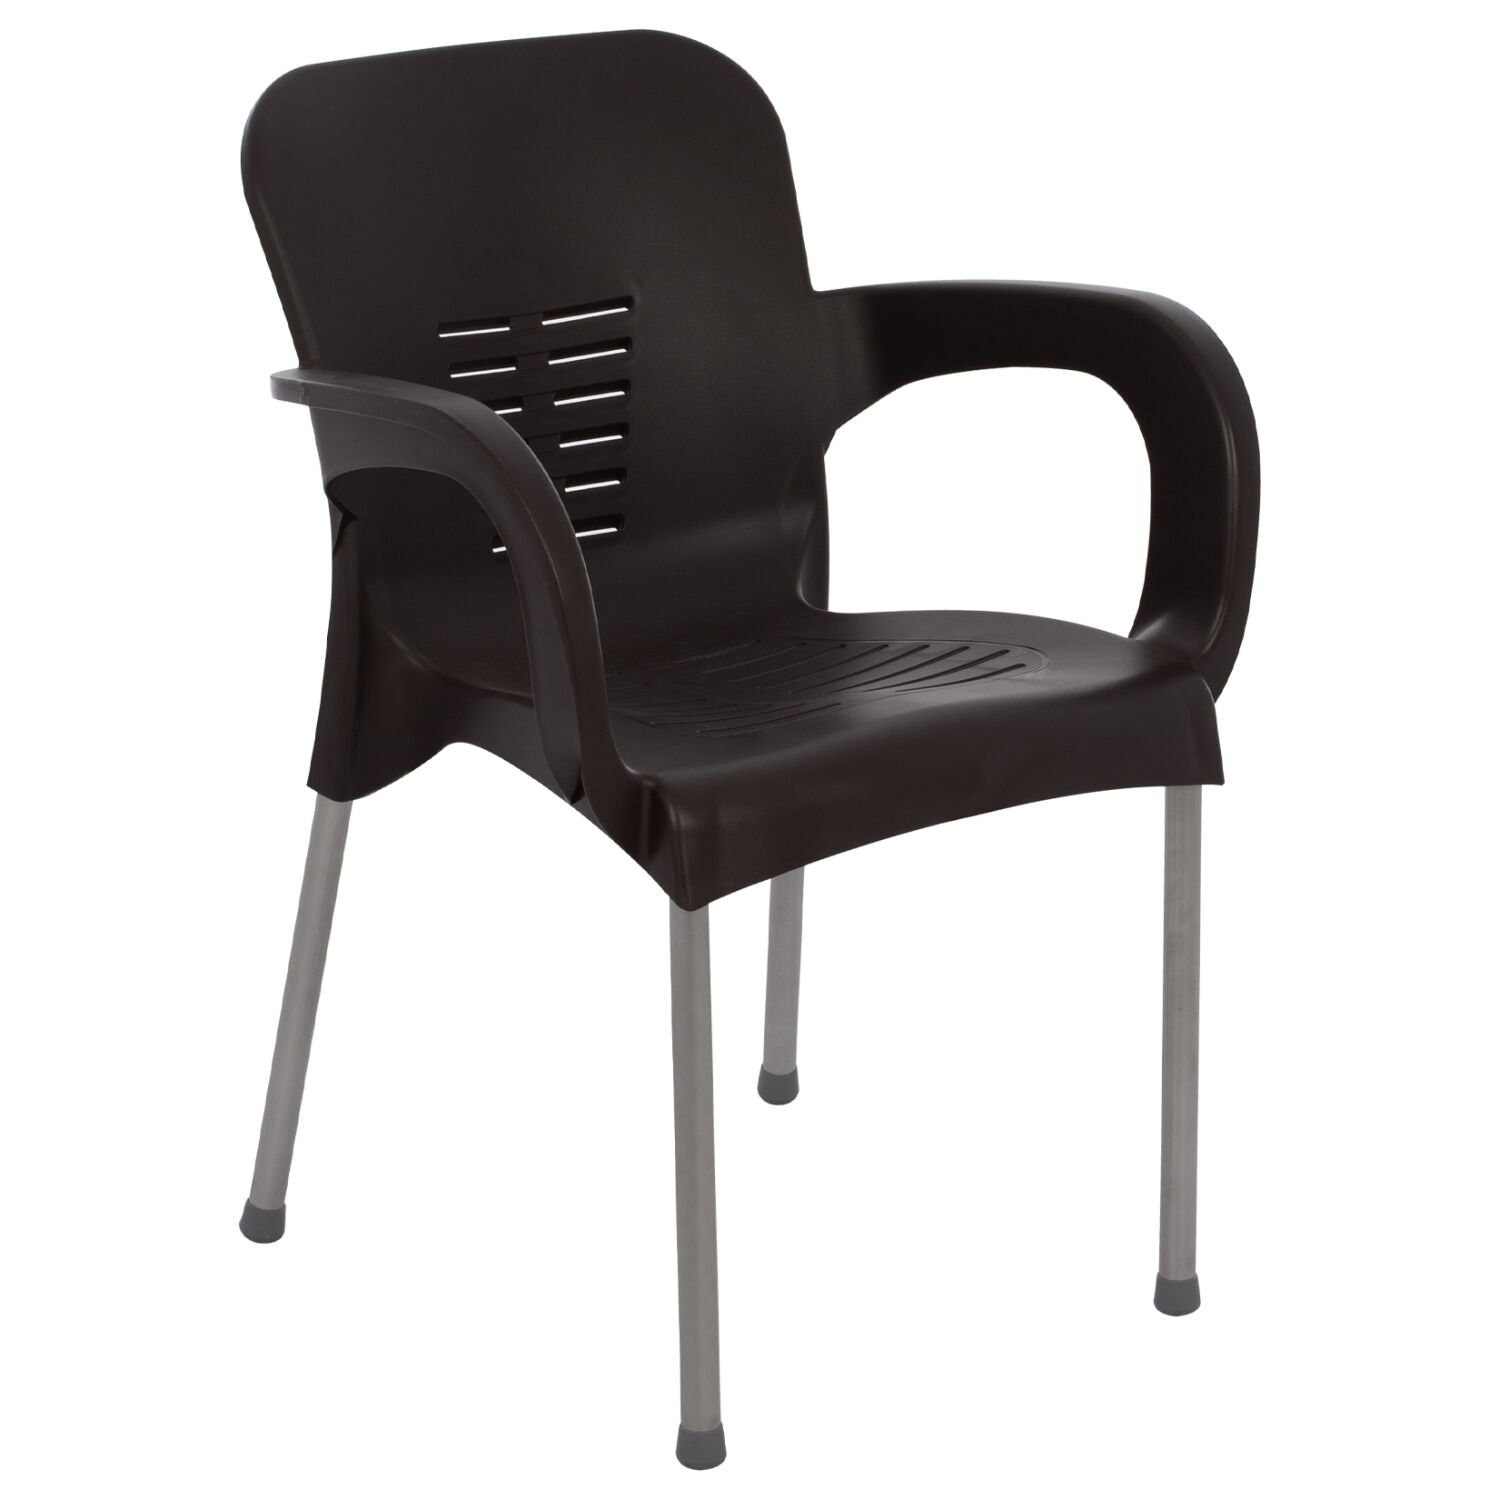 HM5592.13 RECYCLED 59x58x81cm, polypropylene chair, metal legs